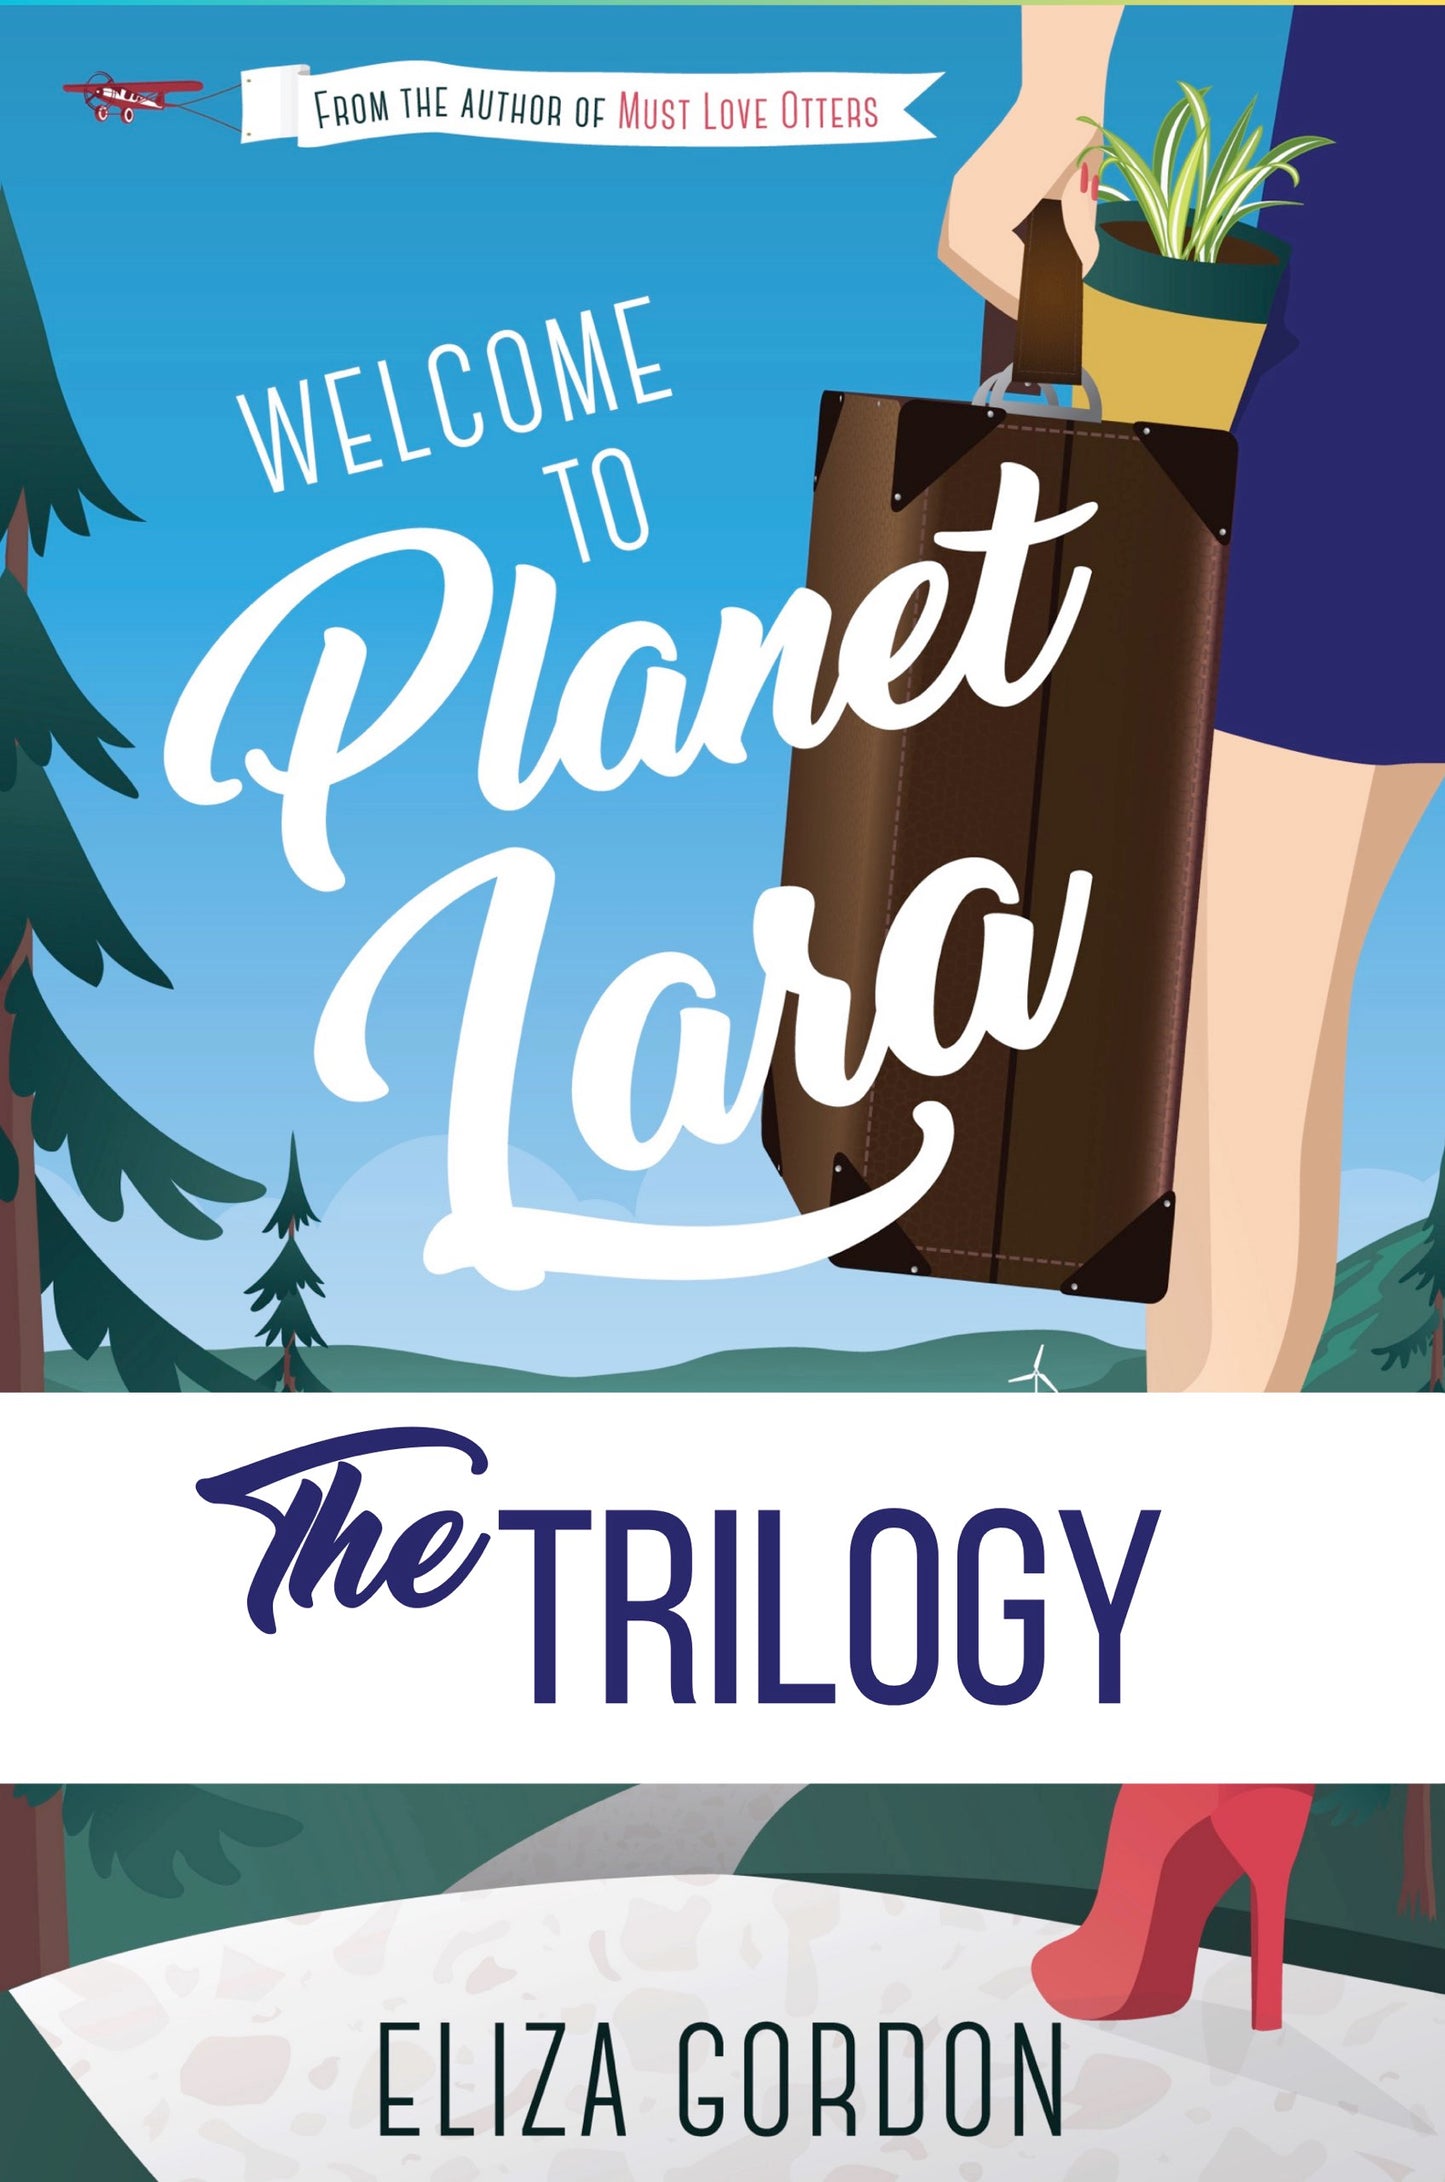 The PLANET LARA Trilogy Ebook Boxset